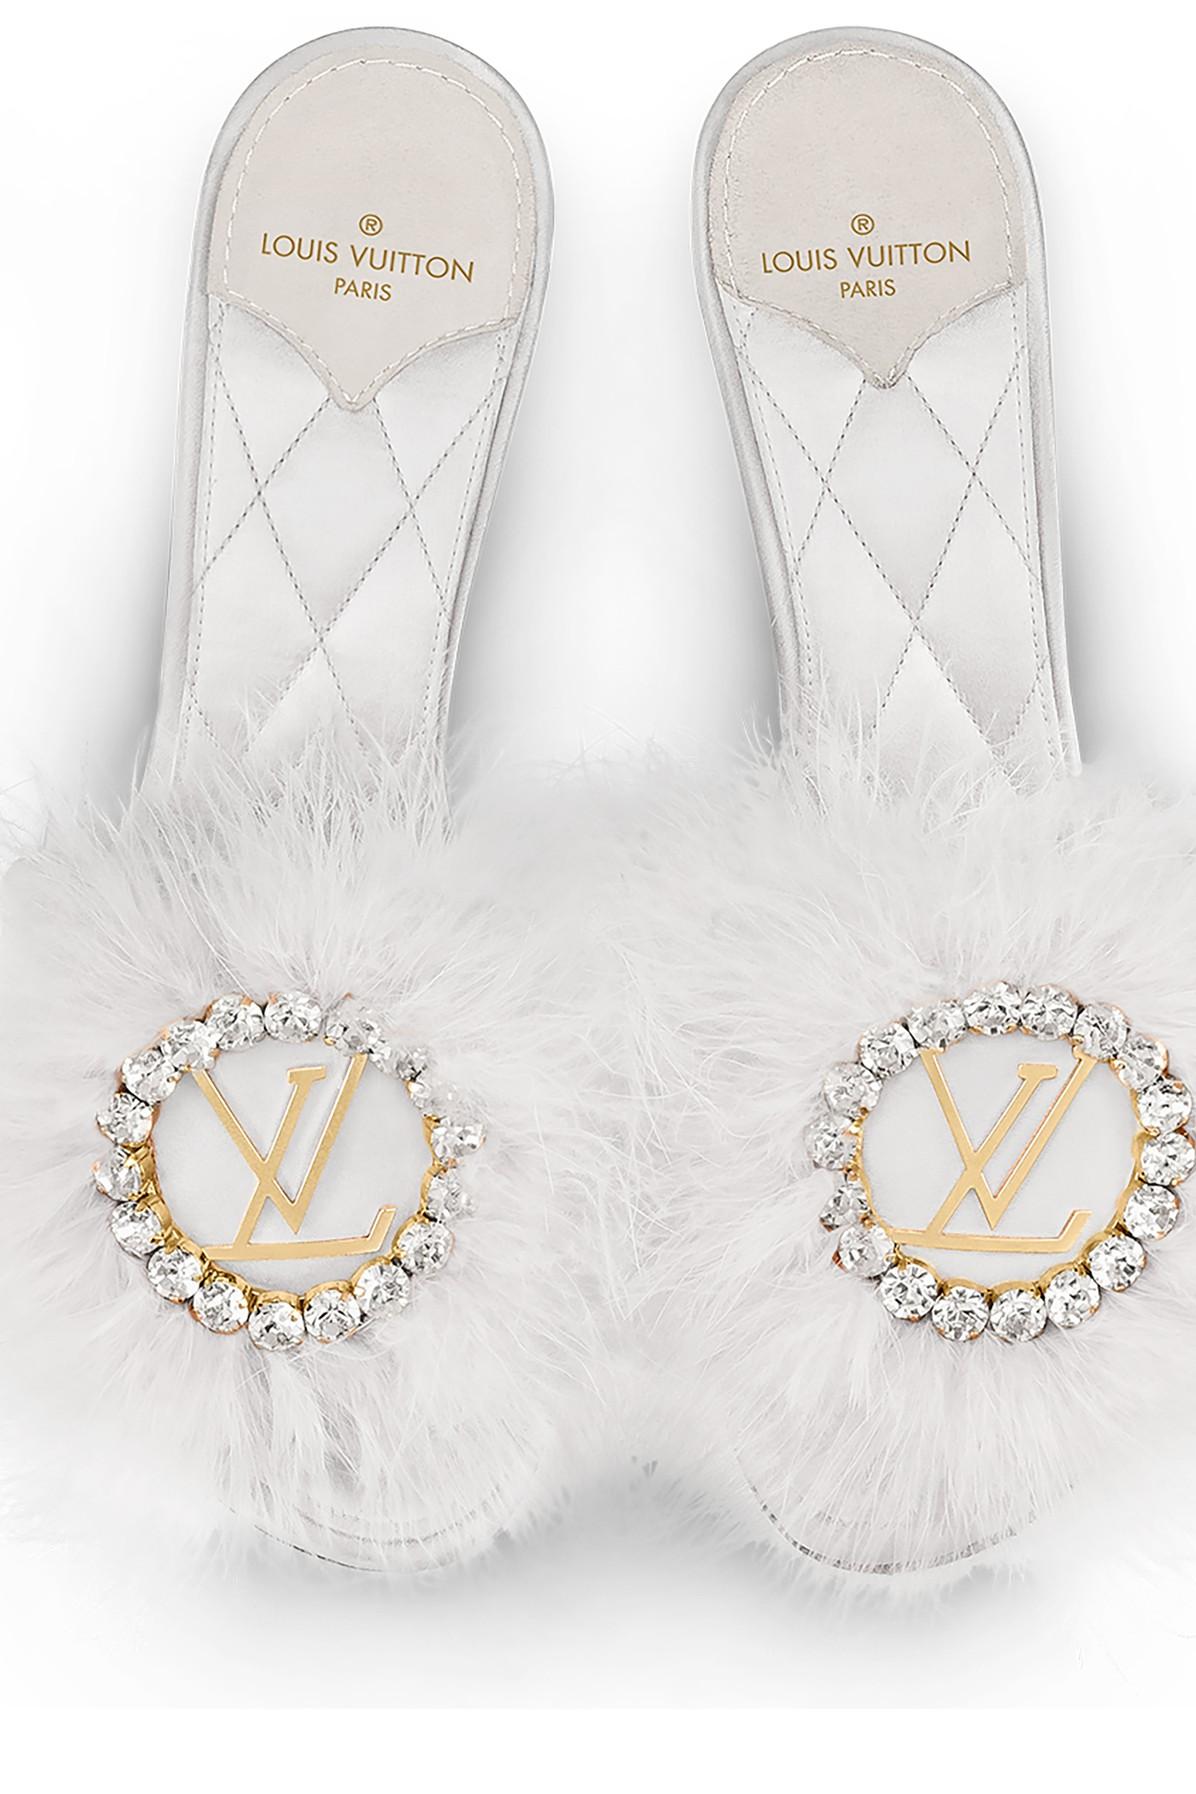 Louis Vuitton's 'Marilyn' Slipper Makes Princess Dreams Come True